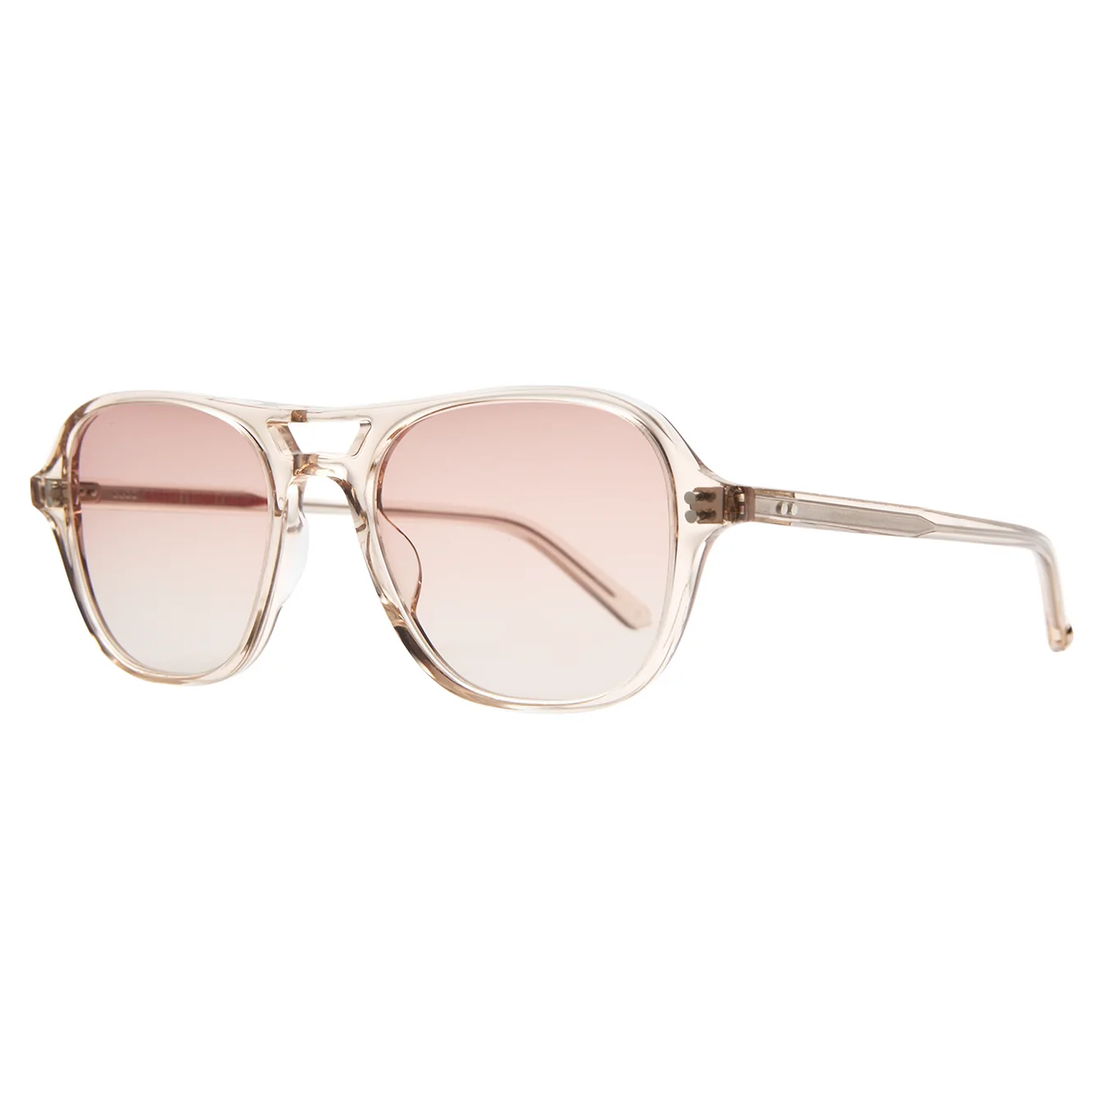 Garrett Leight - "DOC" Sunglasses with Shell Crystal Frames and Semi-Flat Sunrise Gradient Lenses